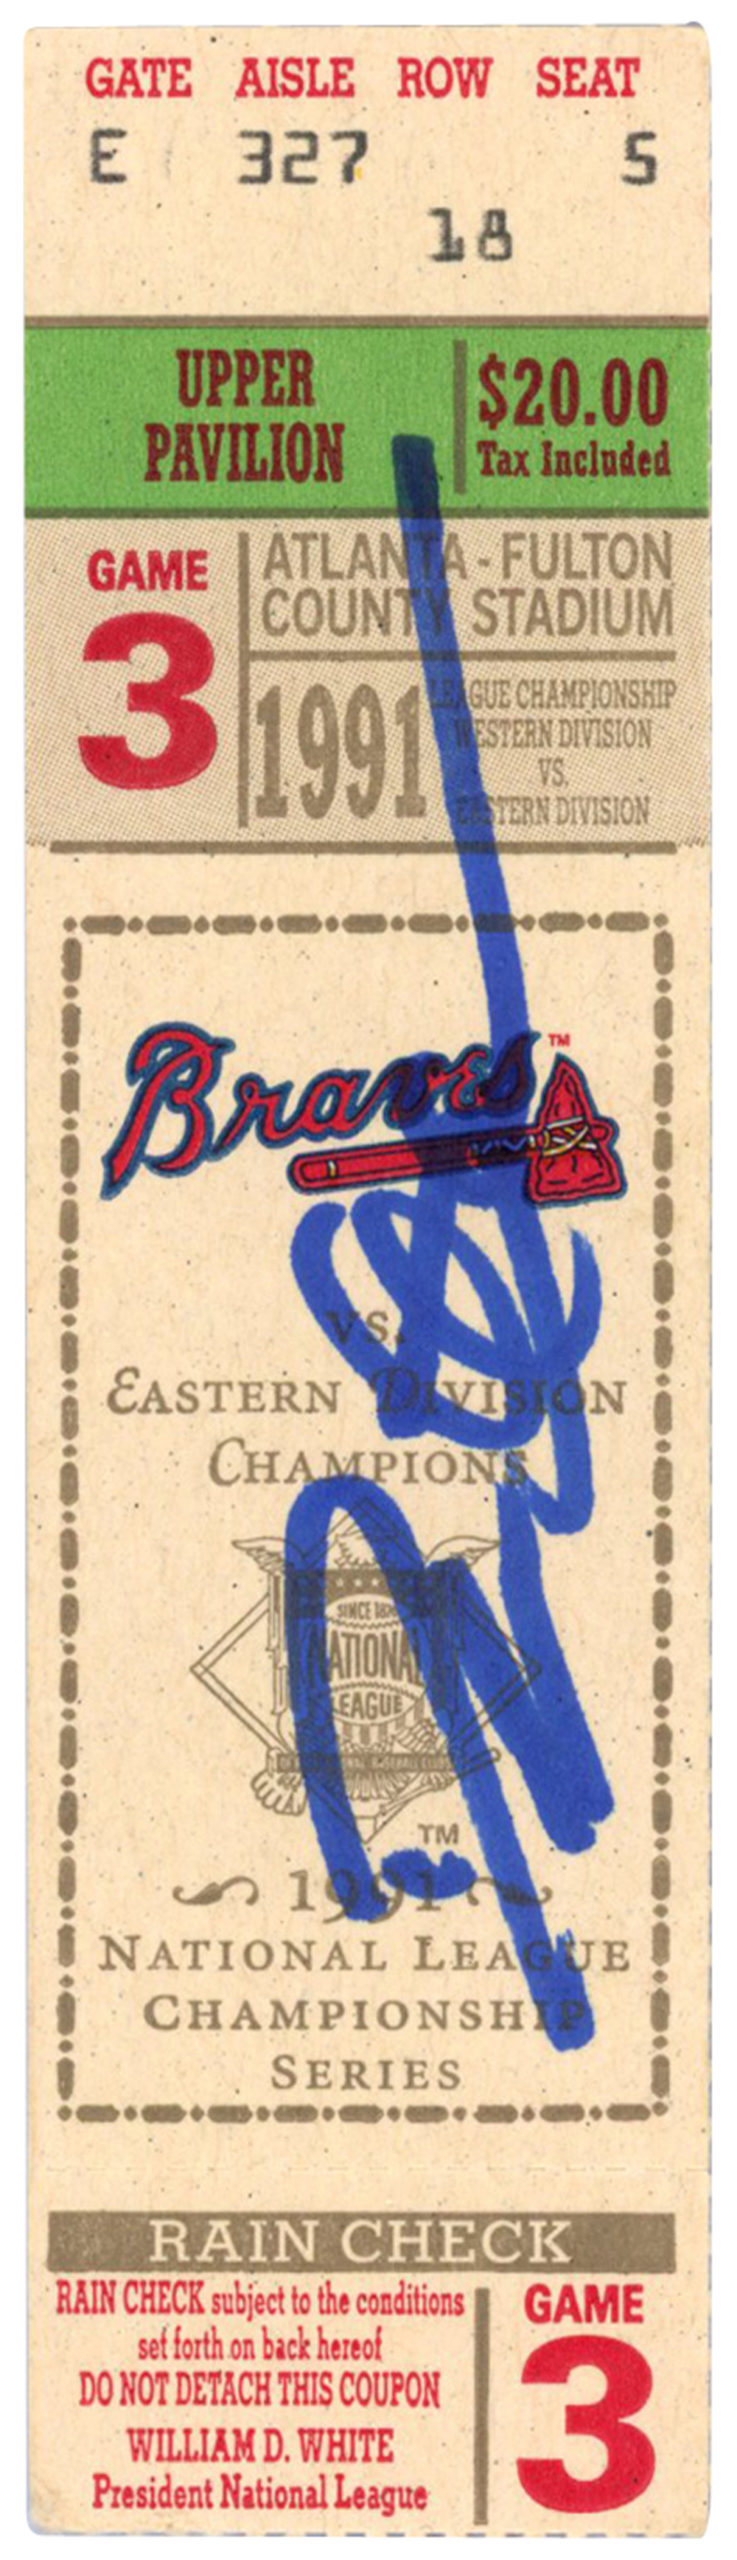 Deion Sanders Autographed Atlanta Braves 1991 NLCS Game 3 Ticket BAS